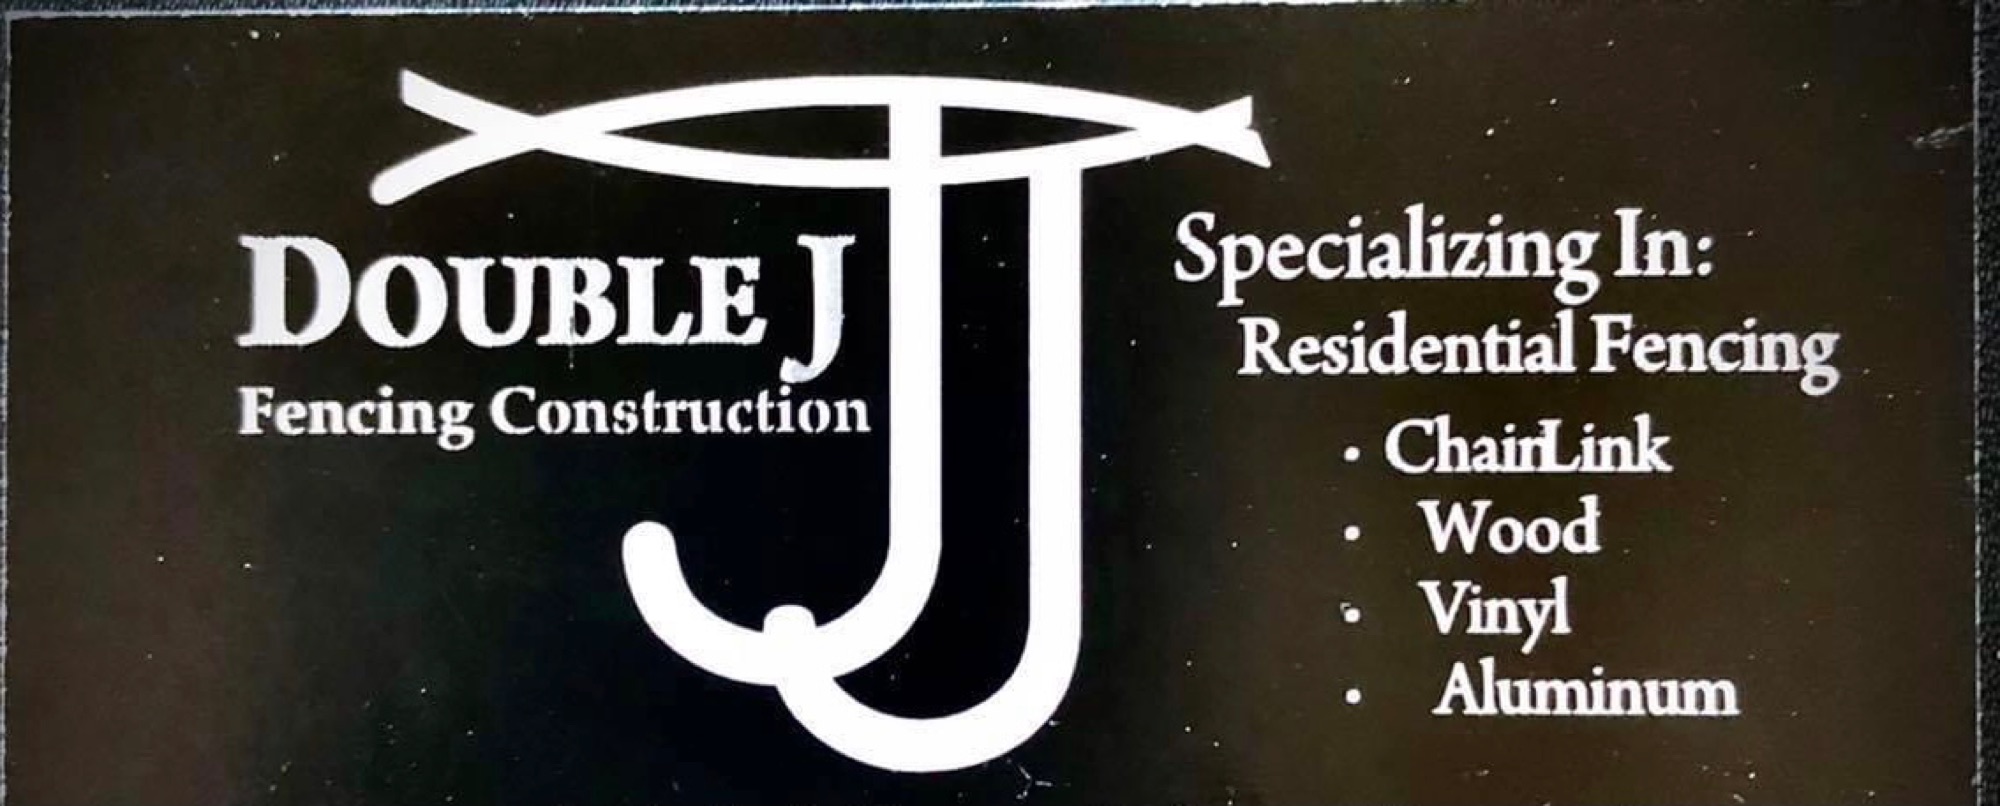 Double J Fencing Construction Logo